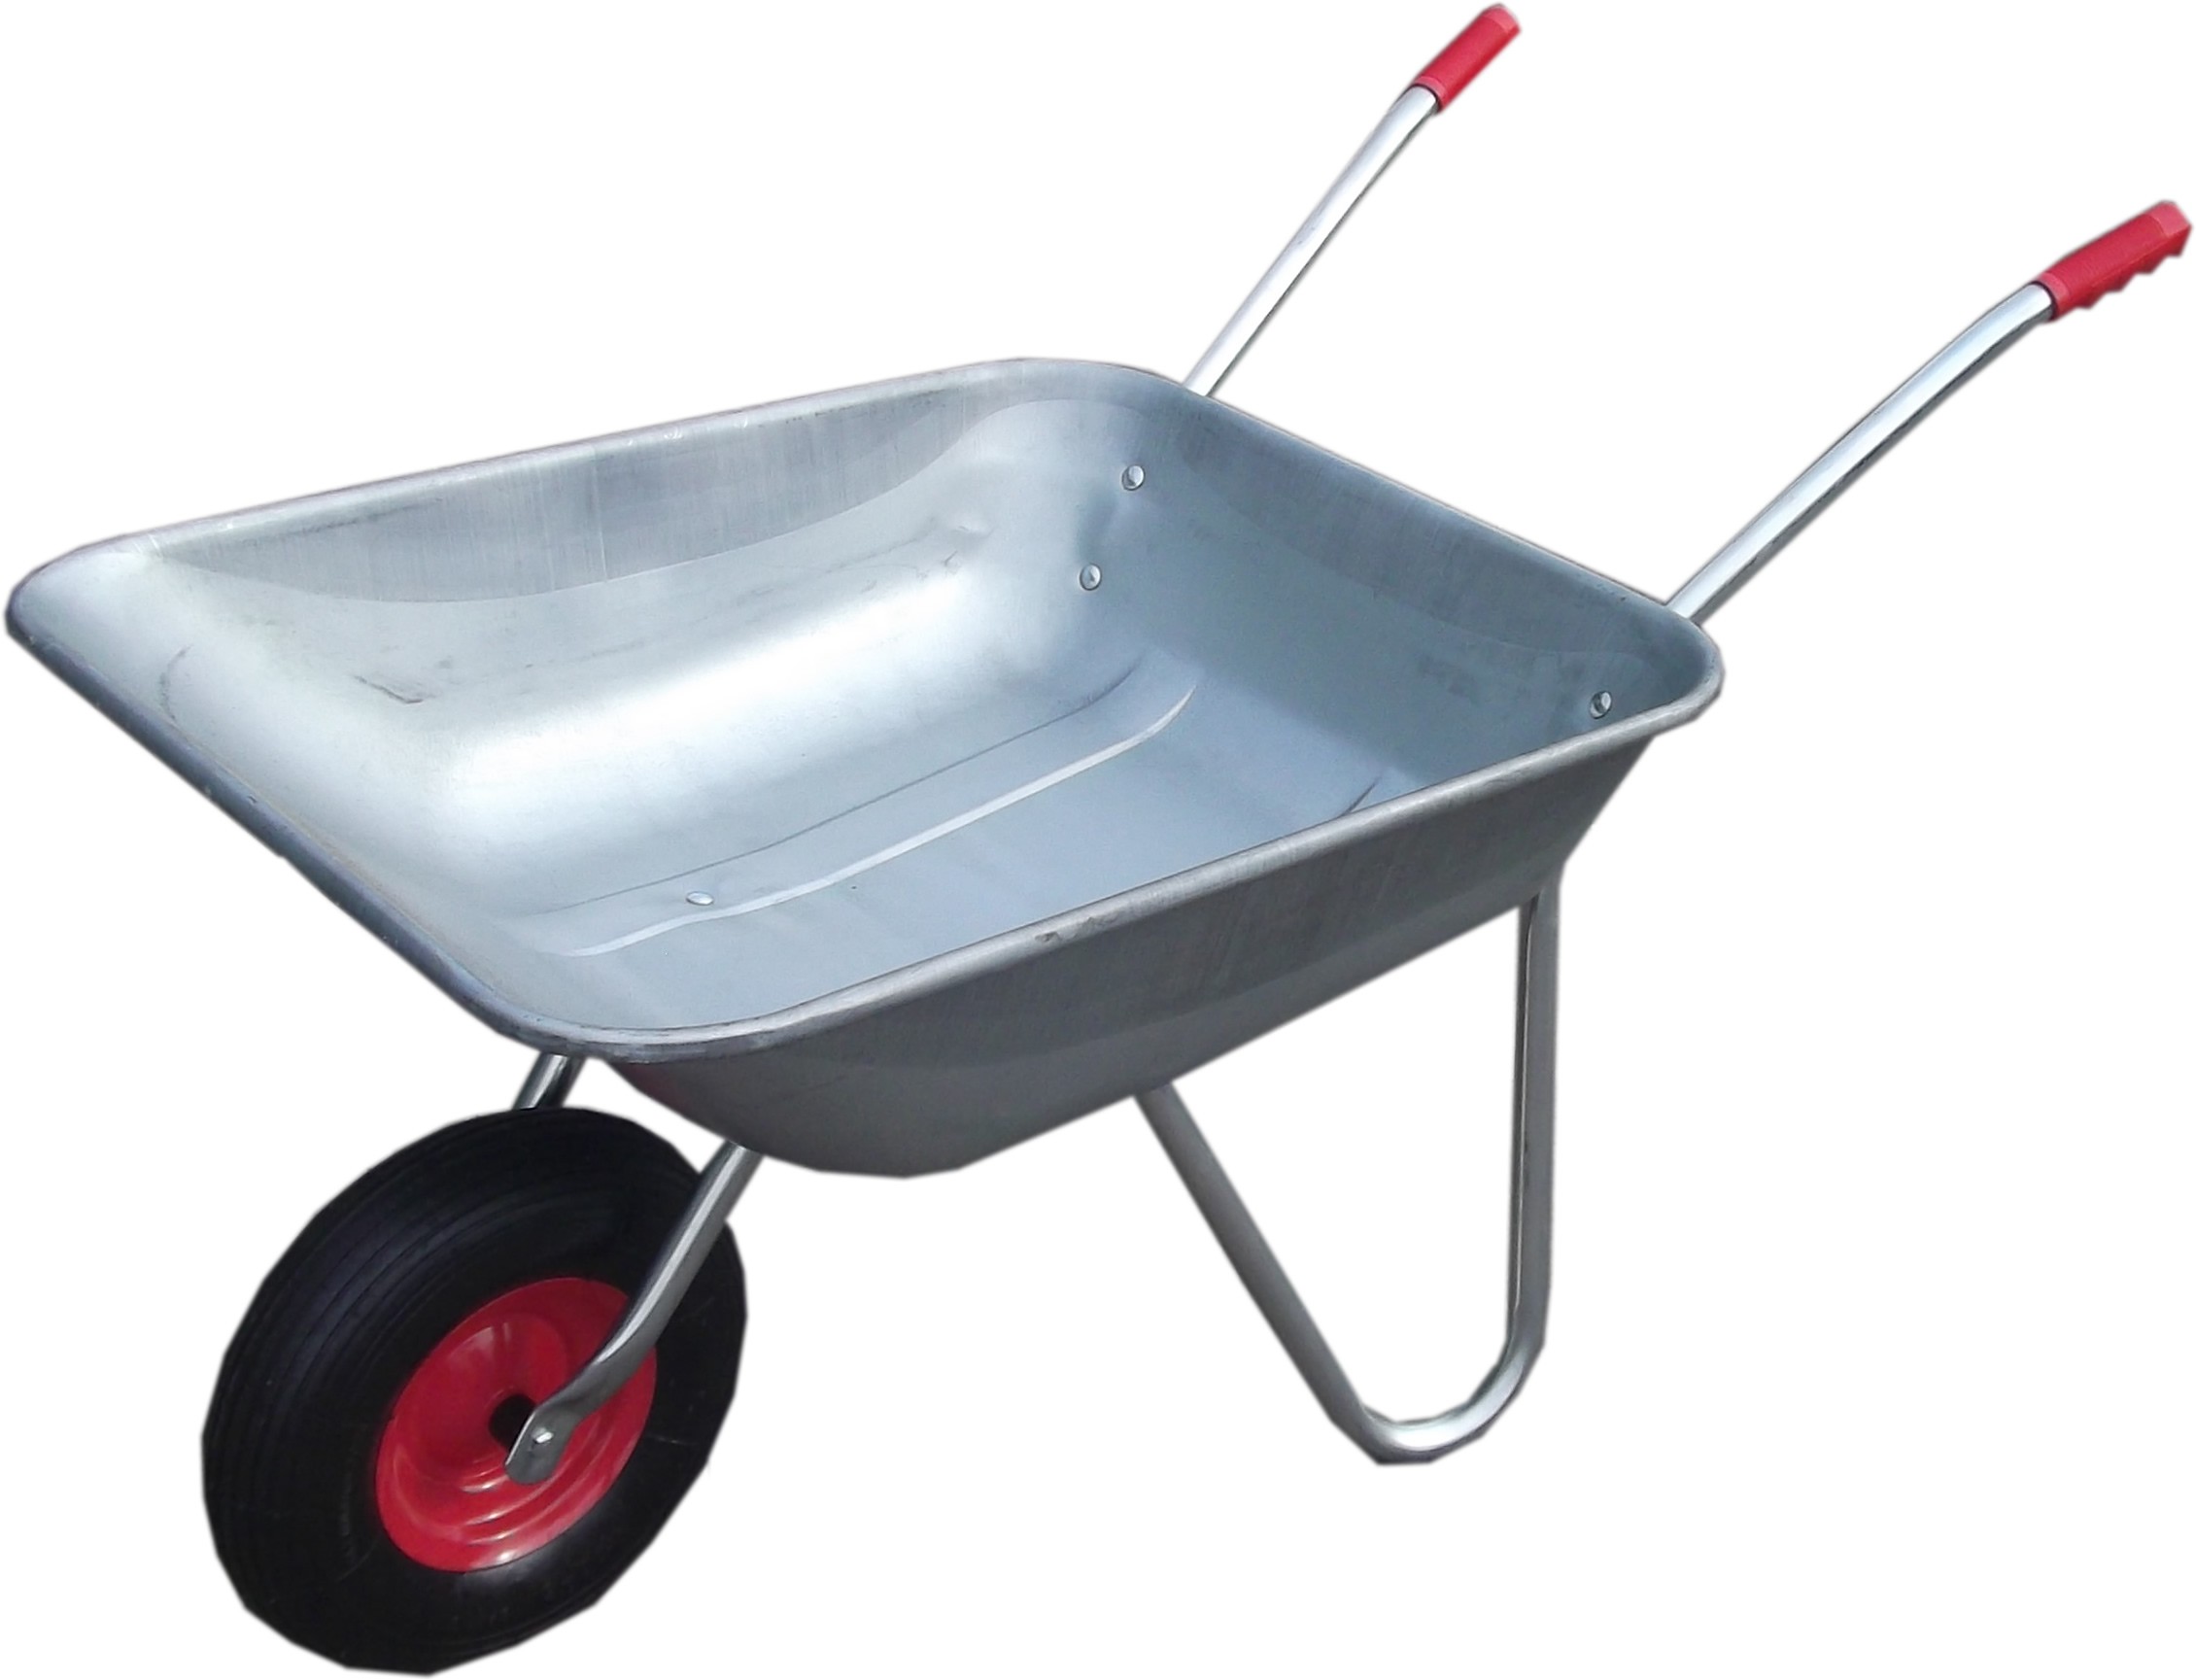 Search through our wide range of Wheelbarrows & Yard Carts